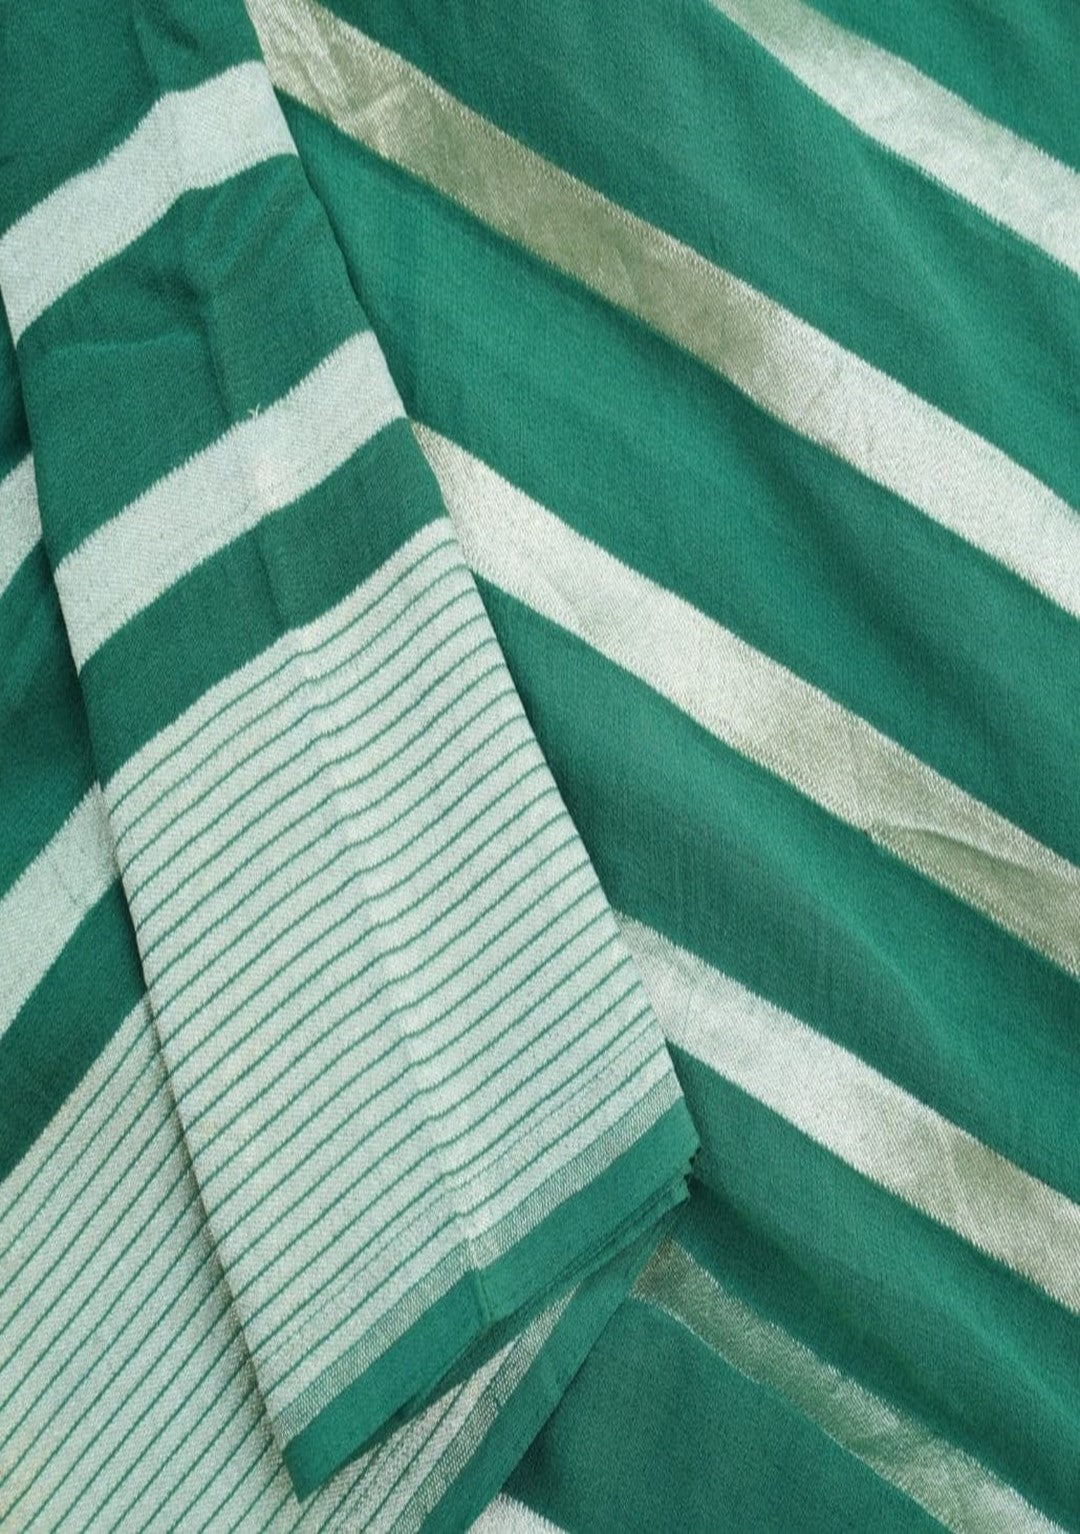 Khaddi handloom saree in green color with water zari work